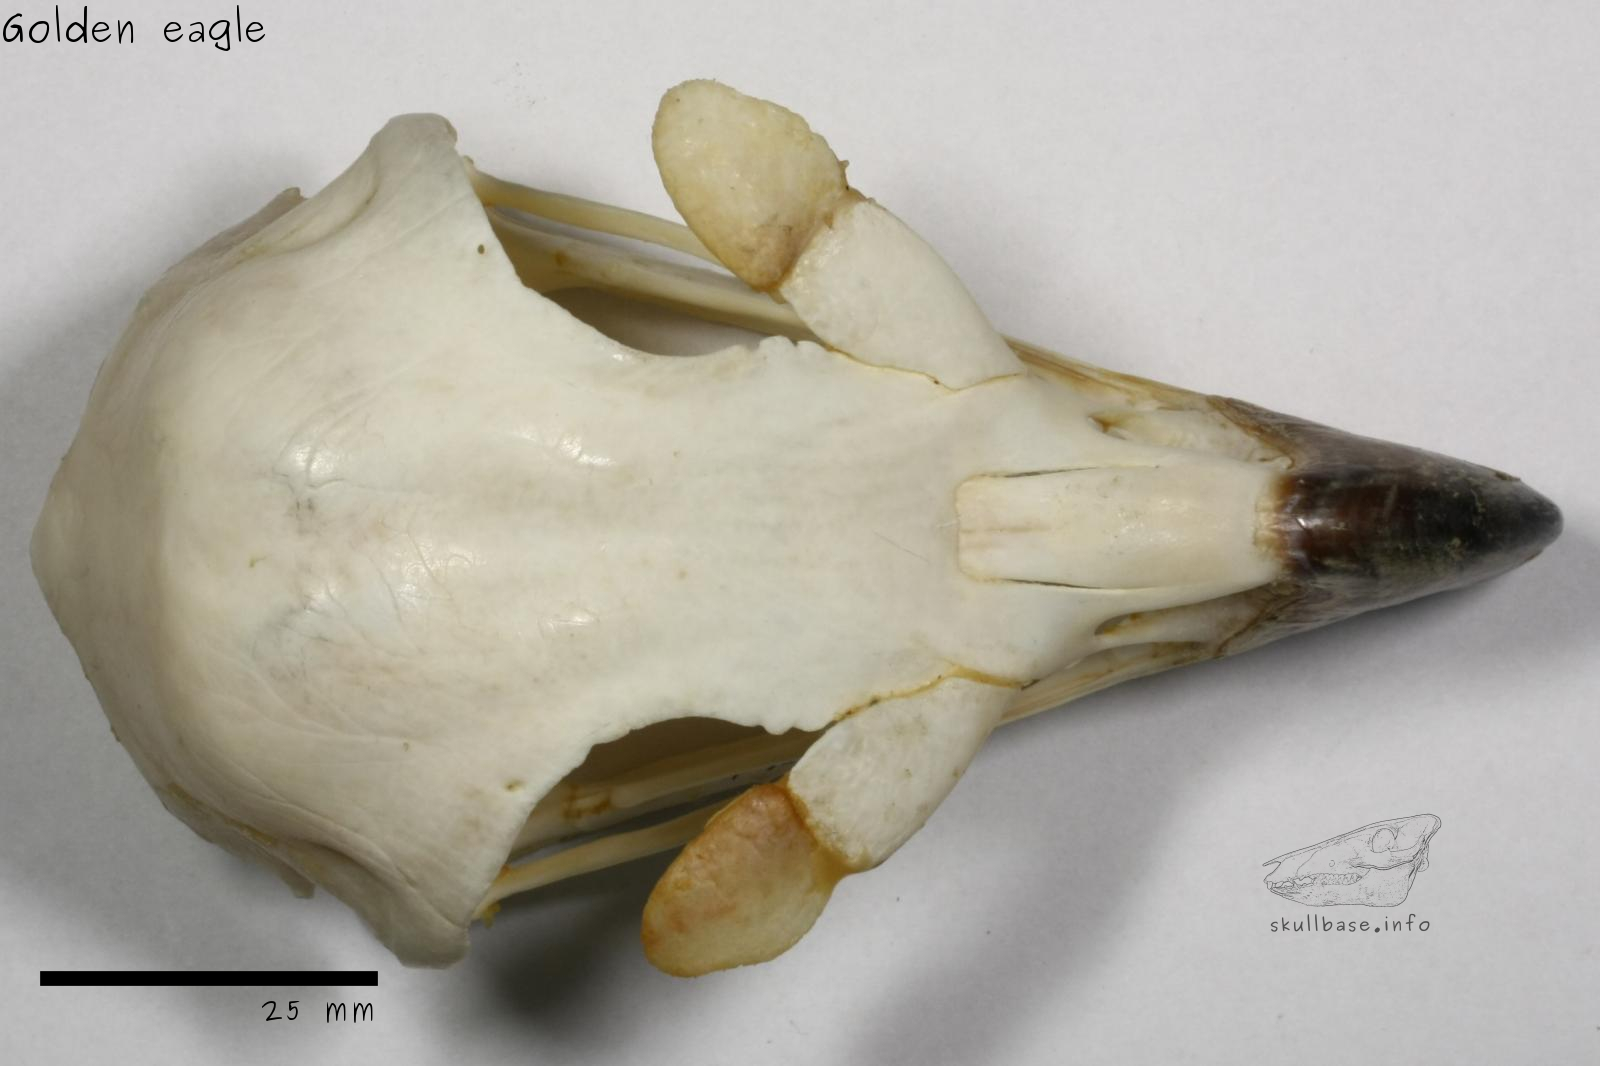 Golden eagle (Aquila chrysaetos) skull dorsal view